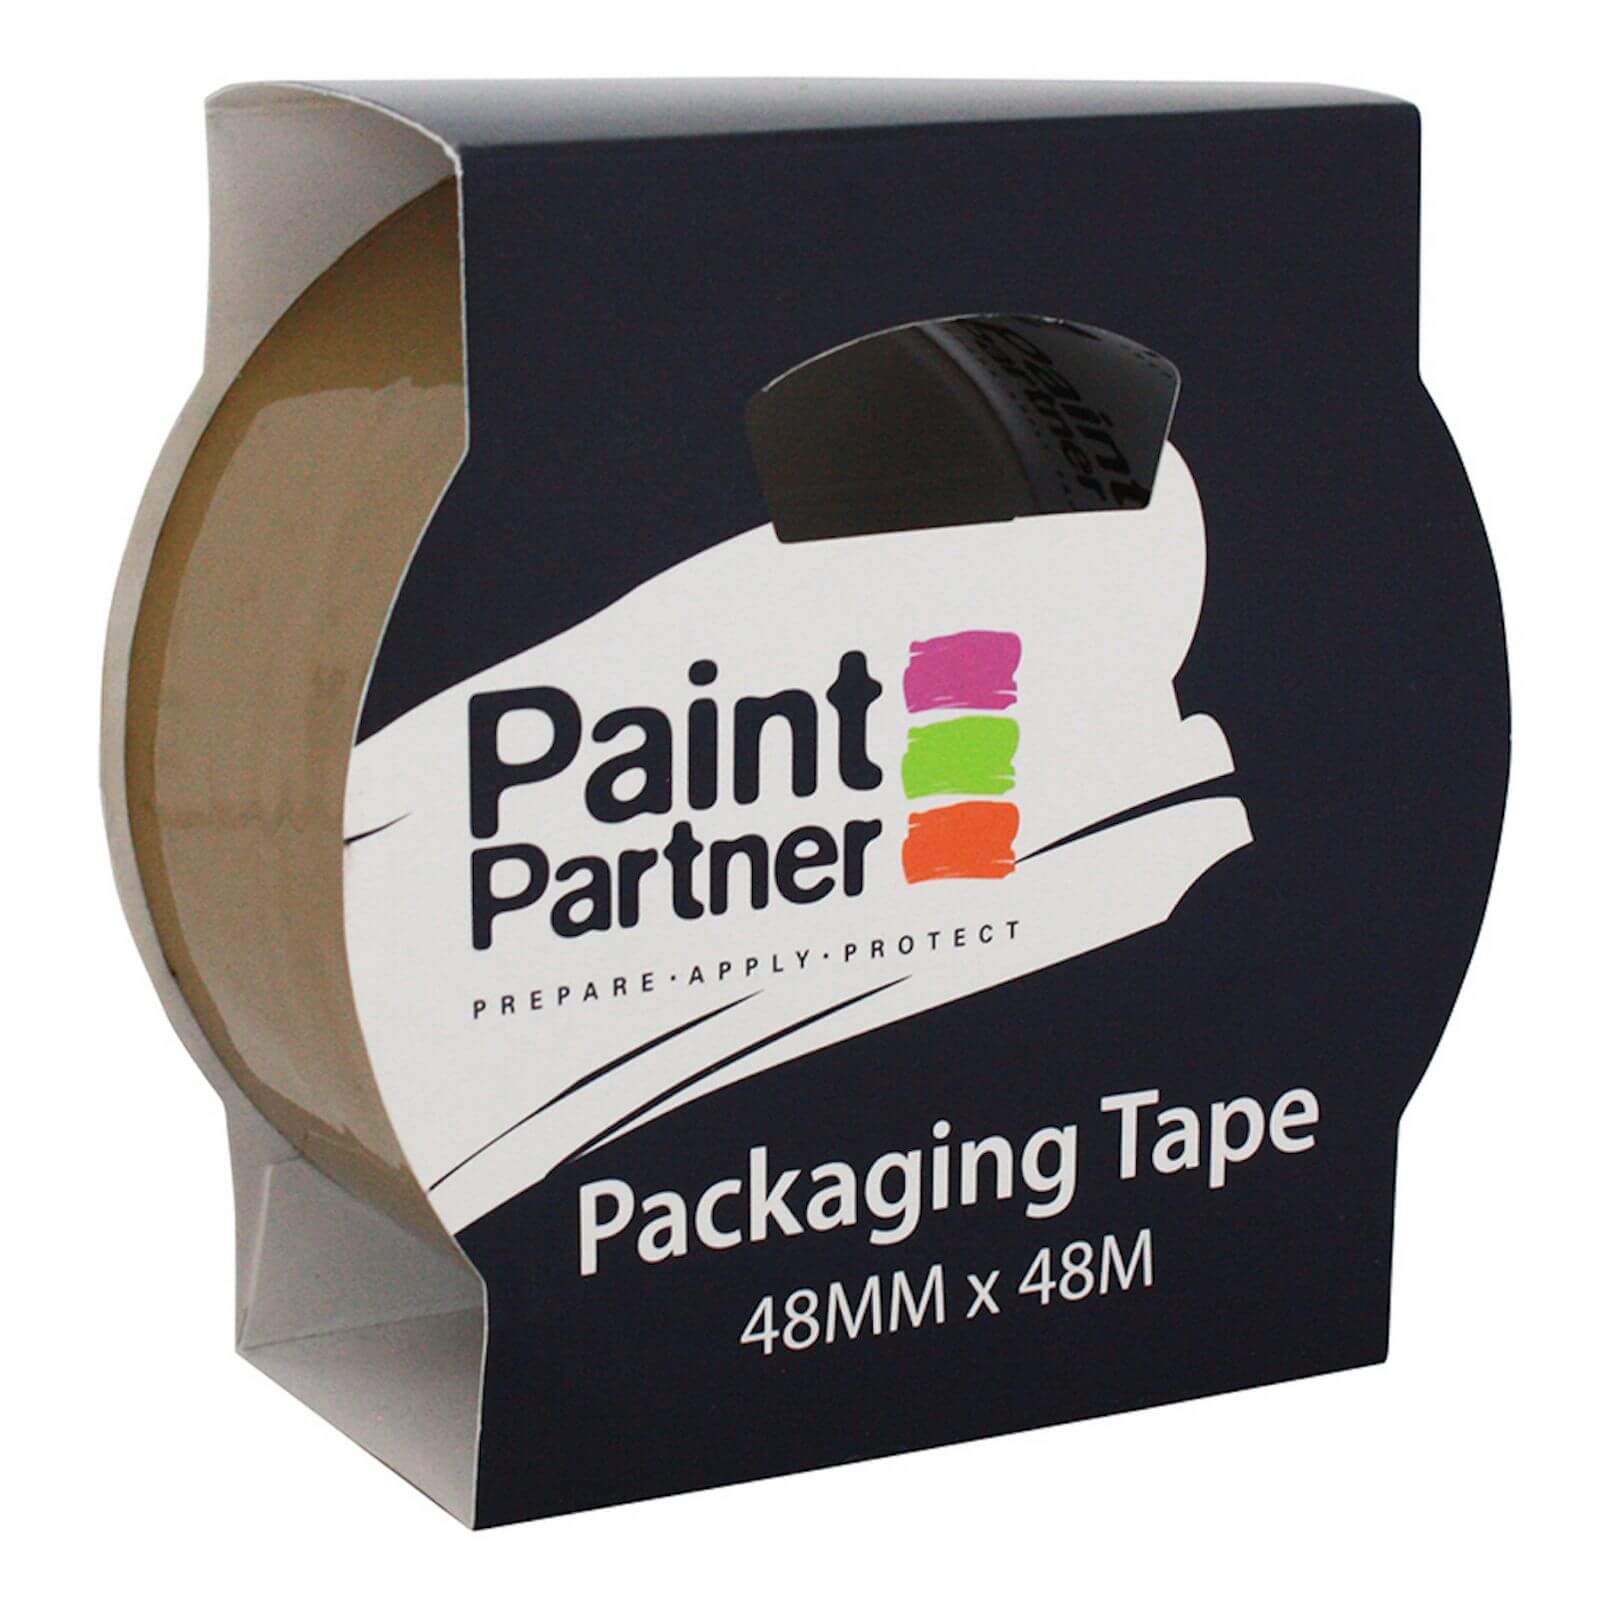 Paint Partner Packaging Tape Brown 48mm x 48m